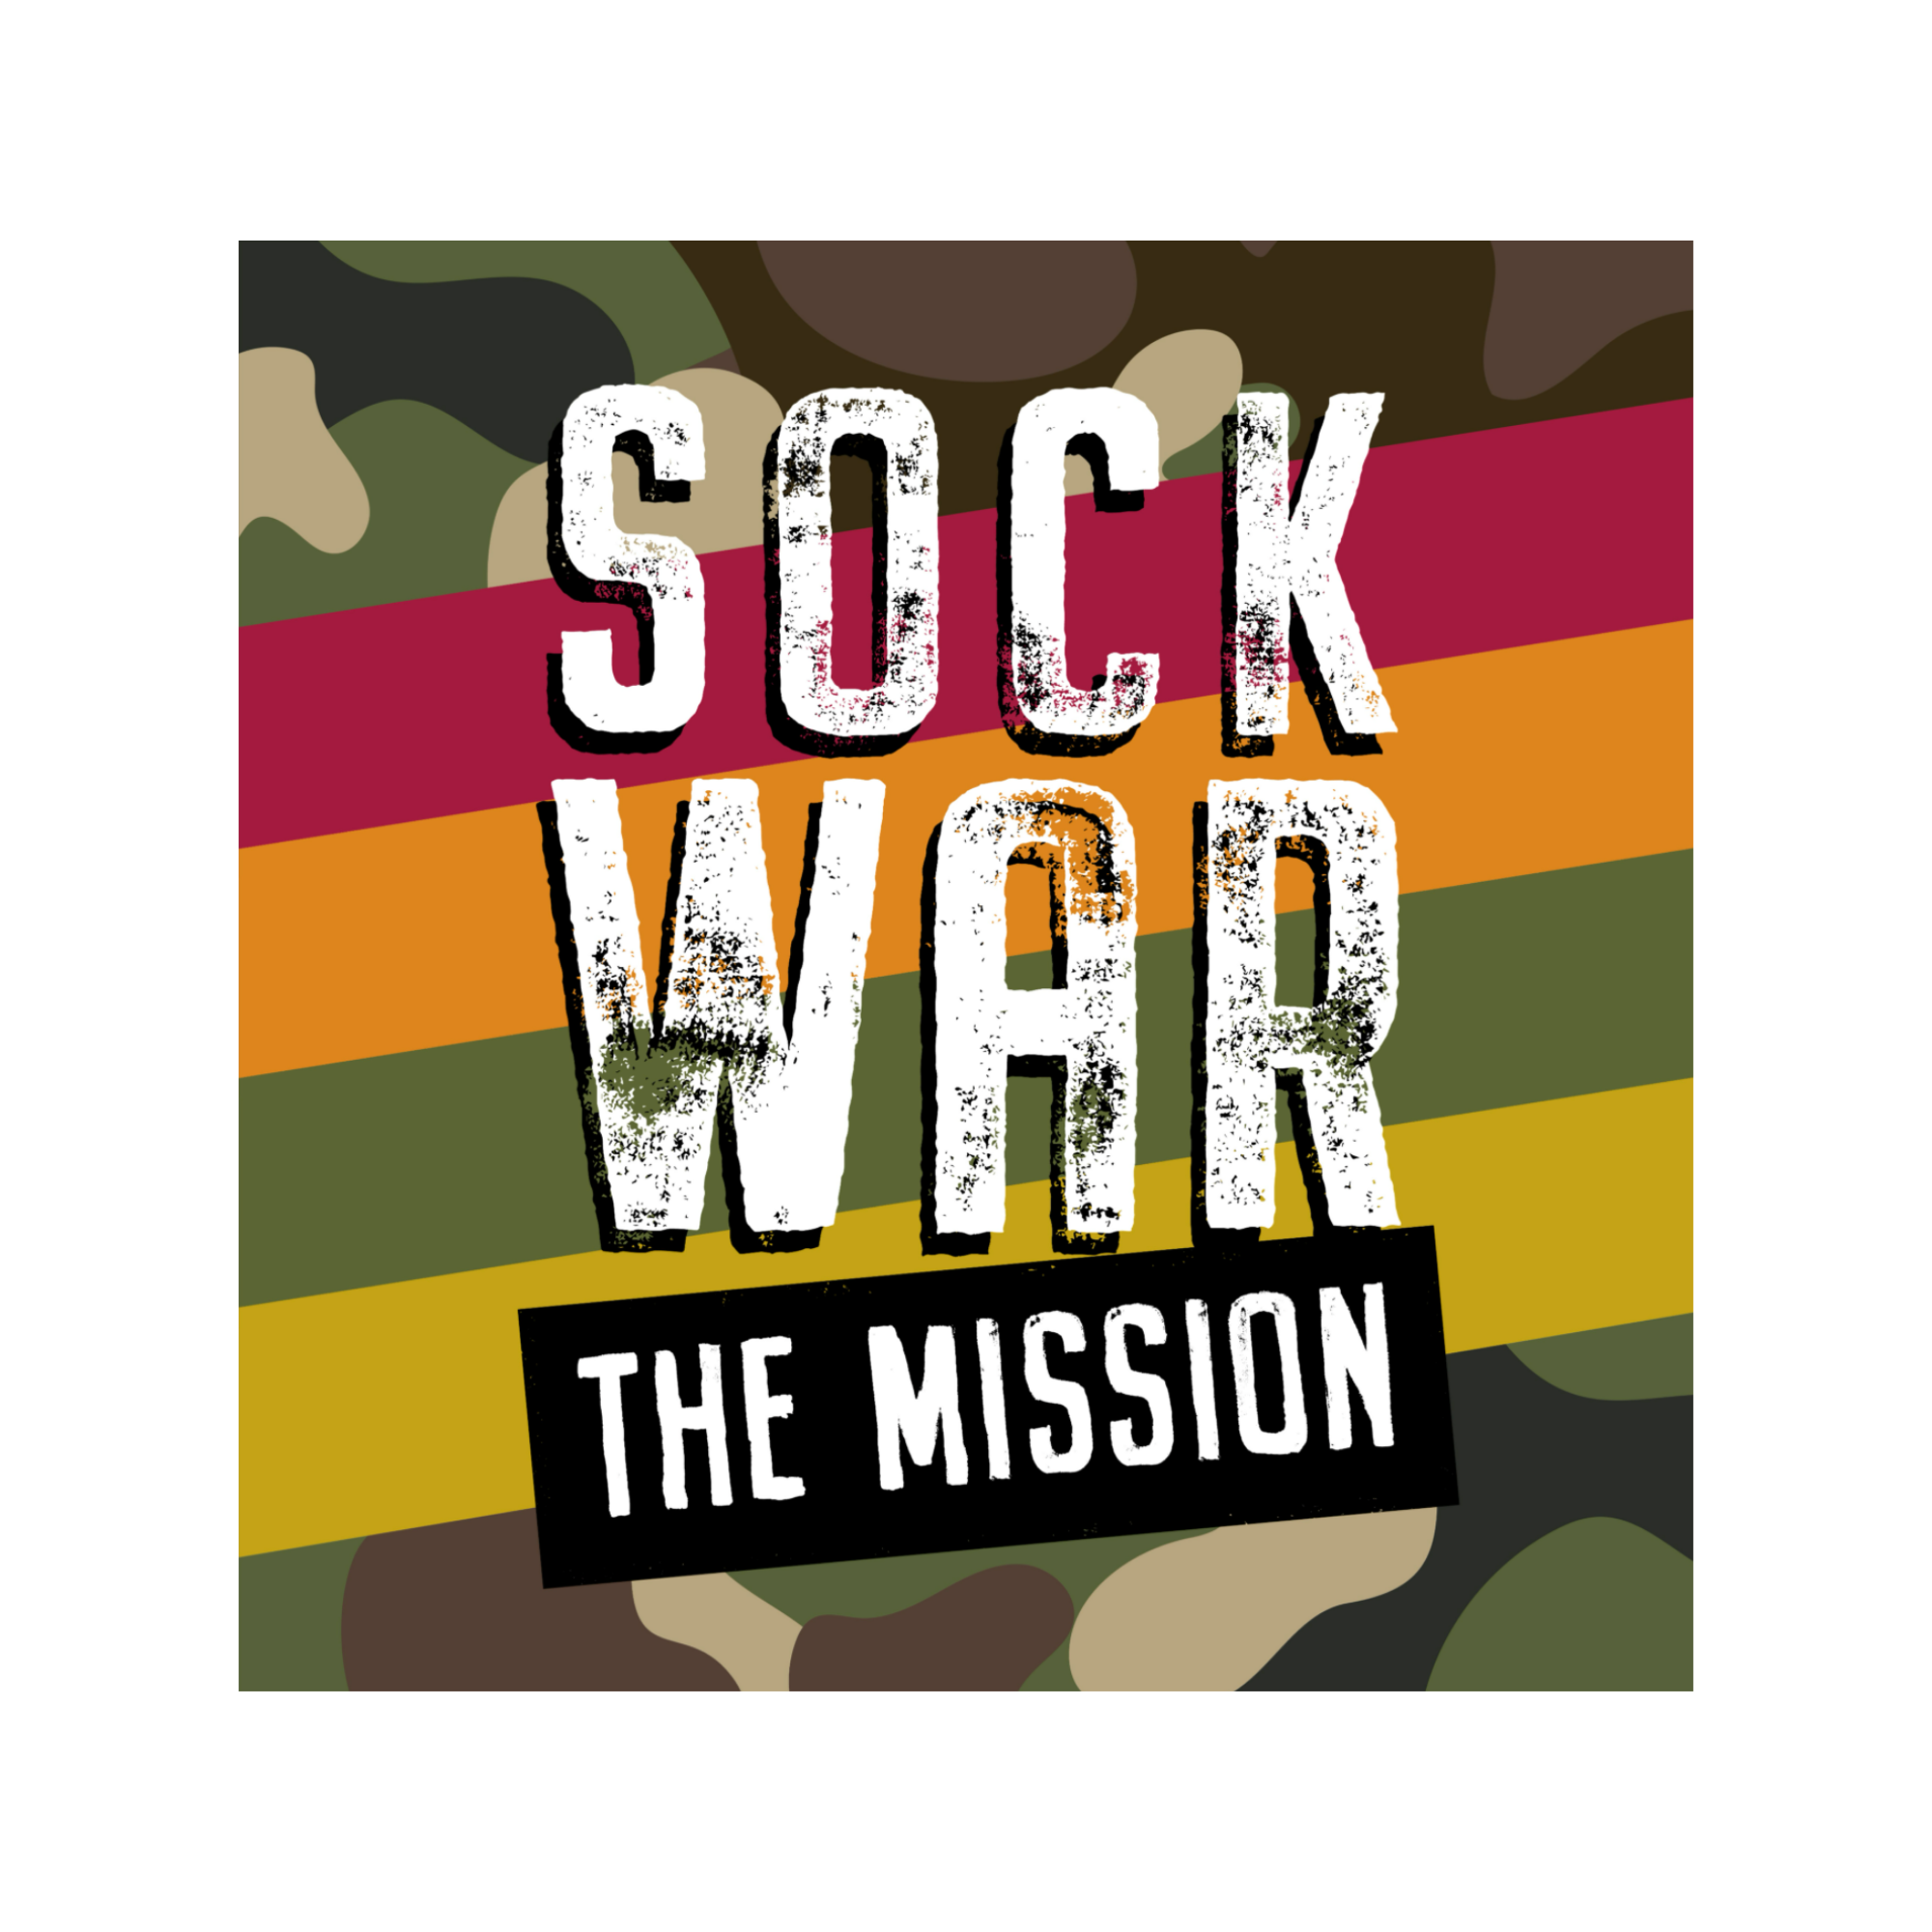 Sock War